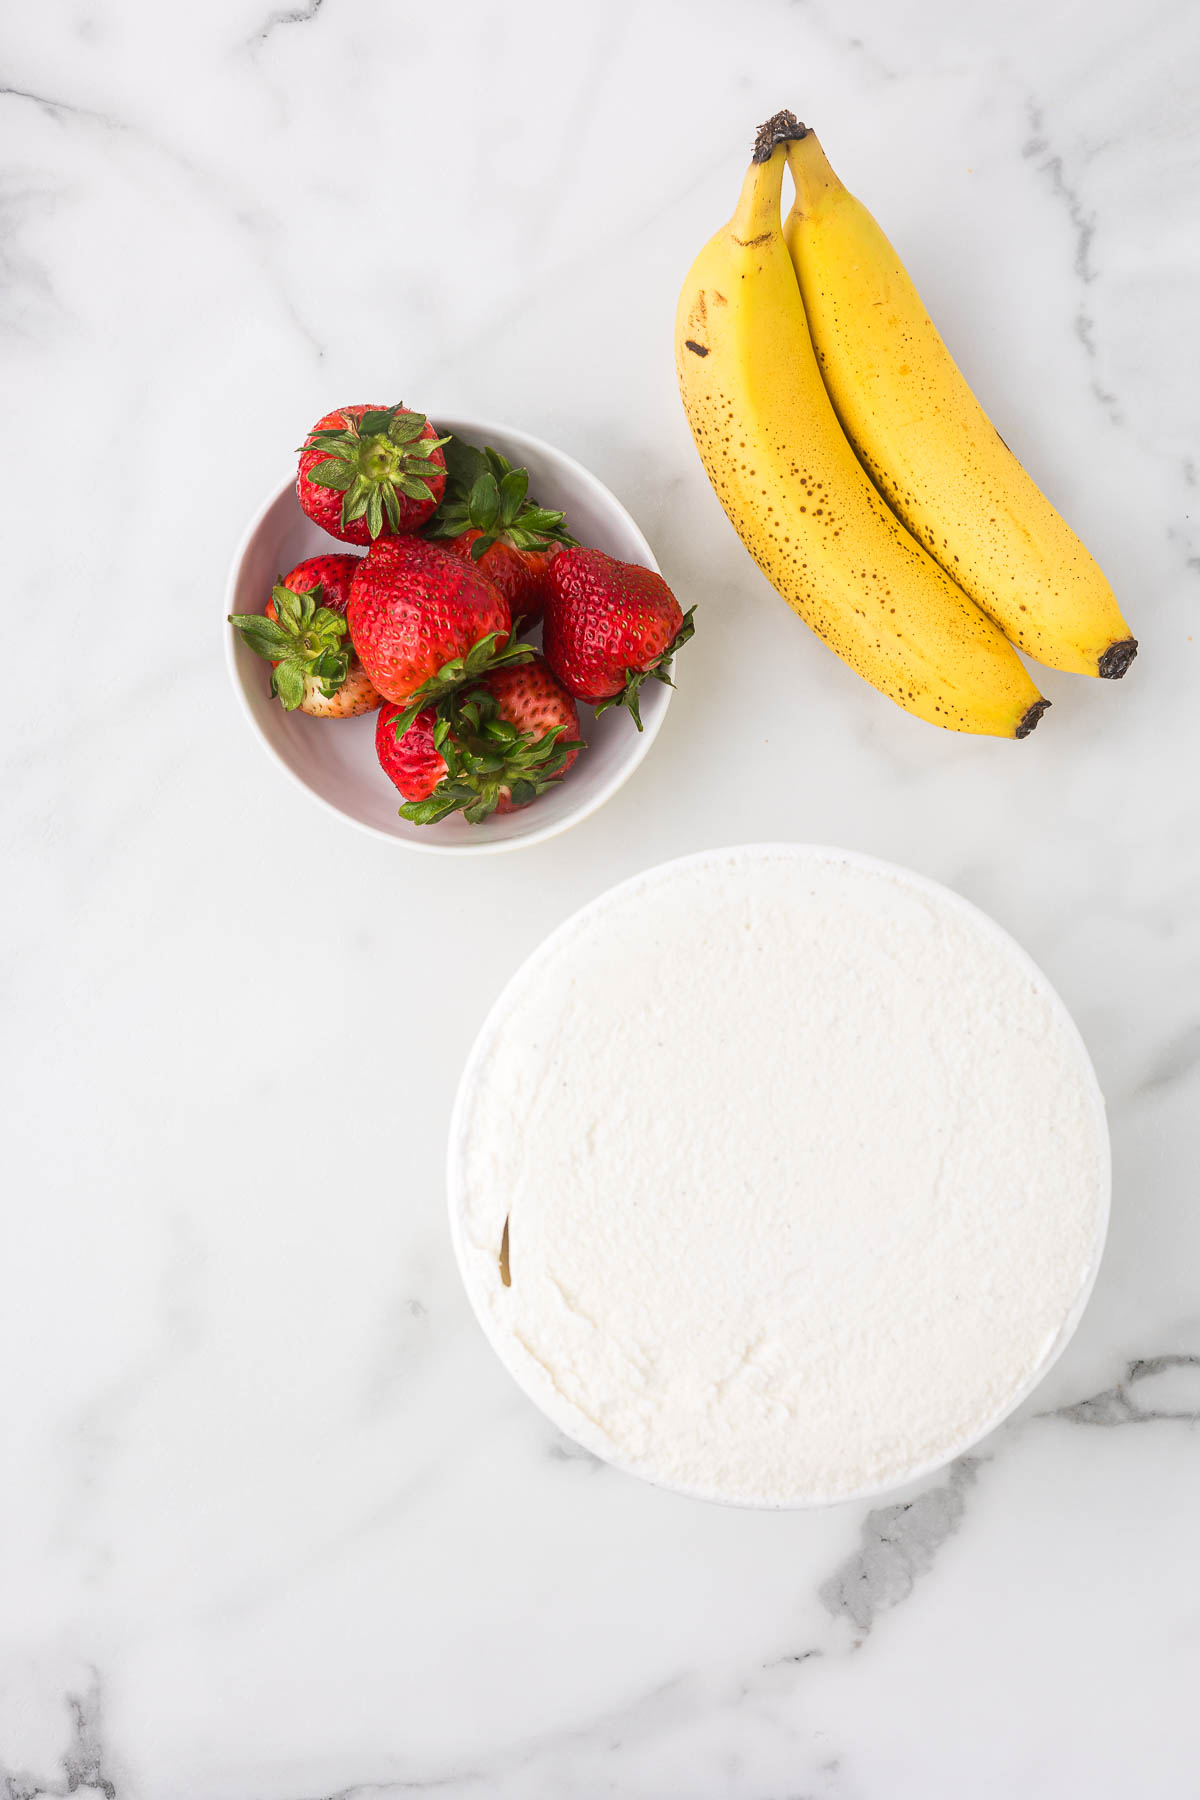 Ingredients to make Strawberry banana milkshakes.